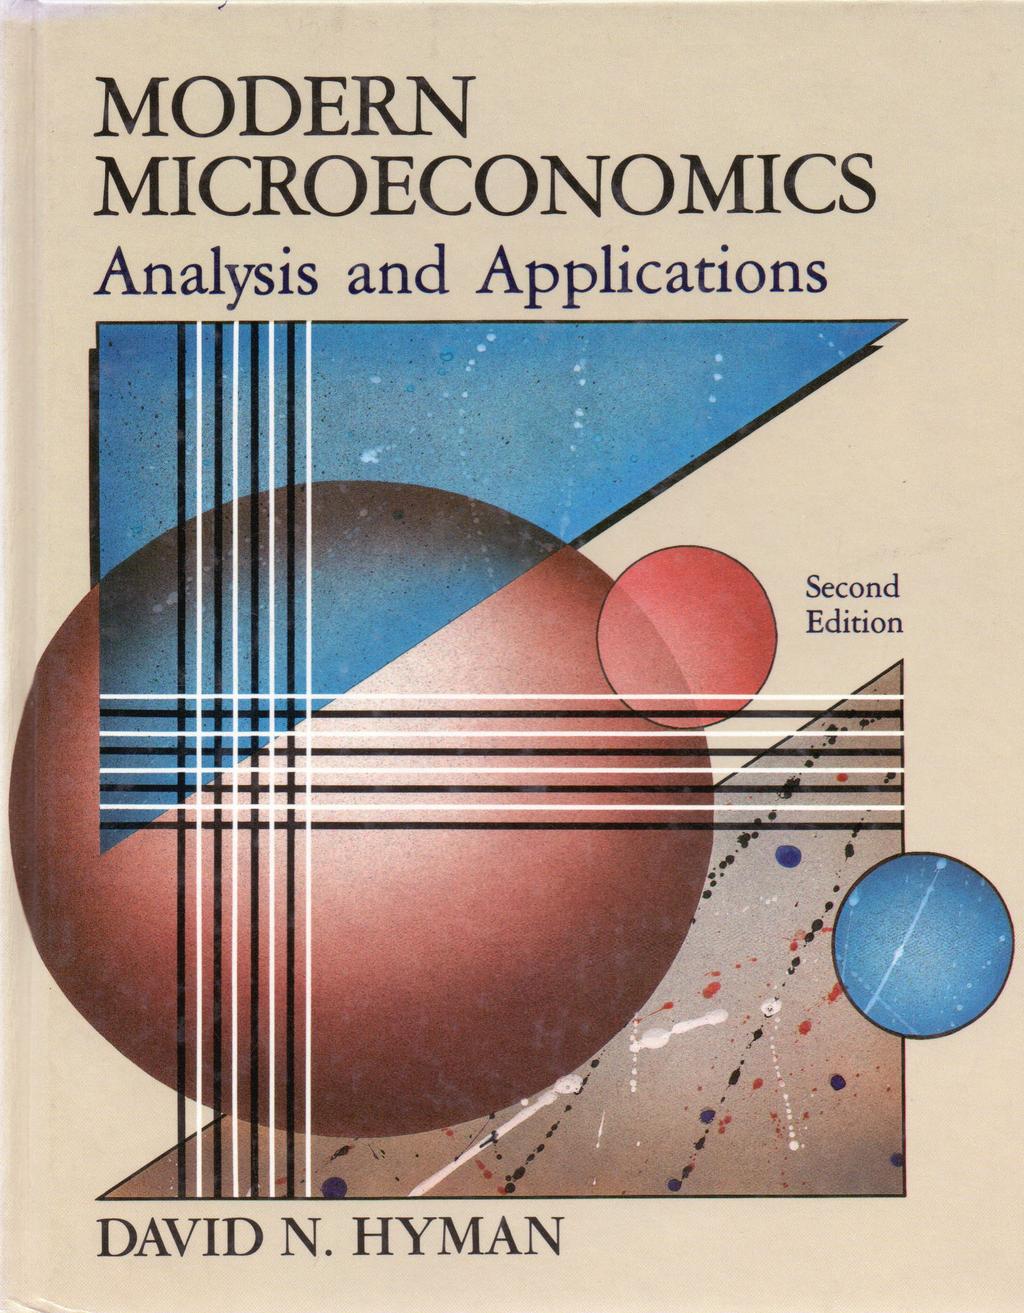 MODERN MICROECONOMICS Analysis and